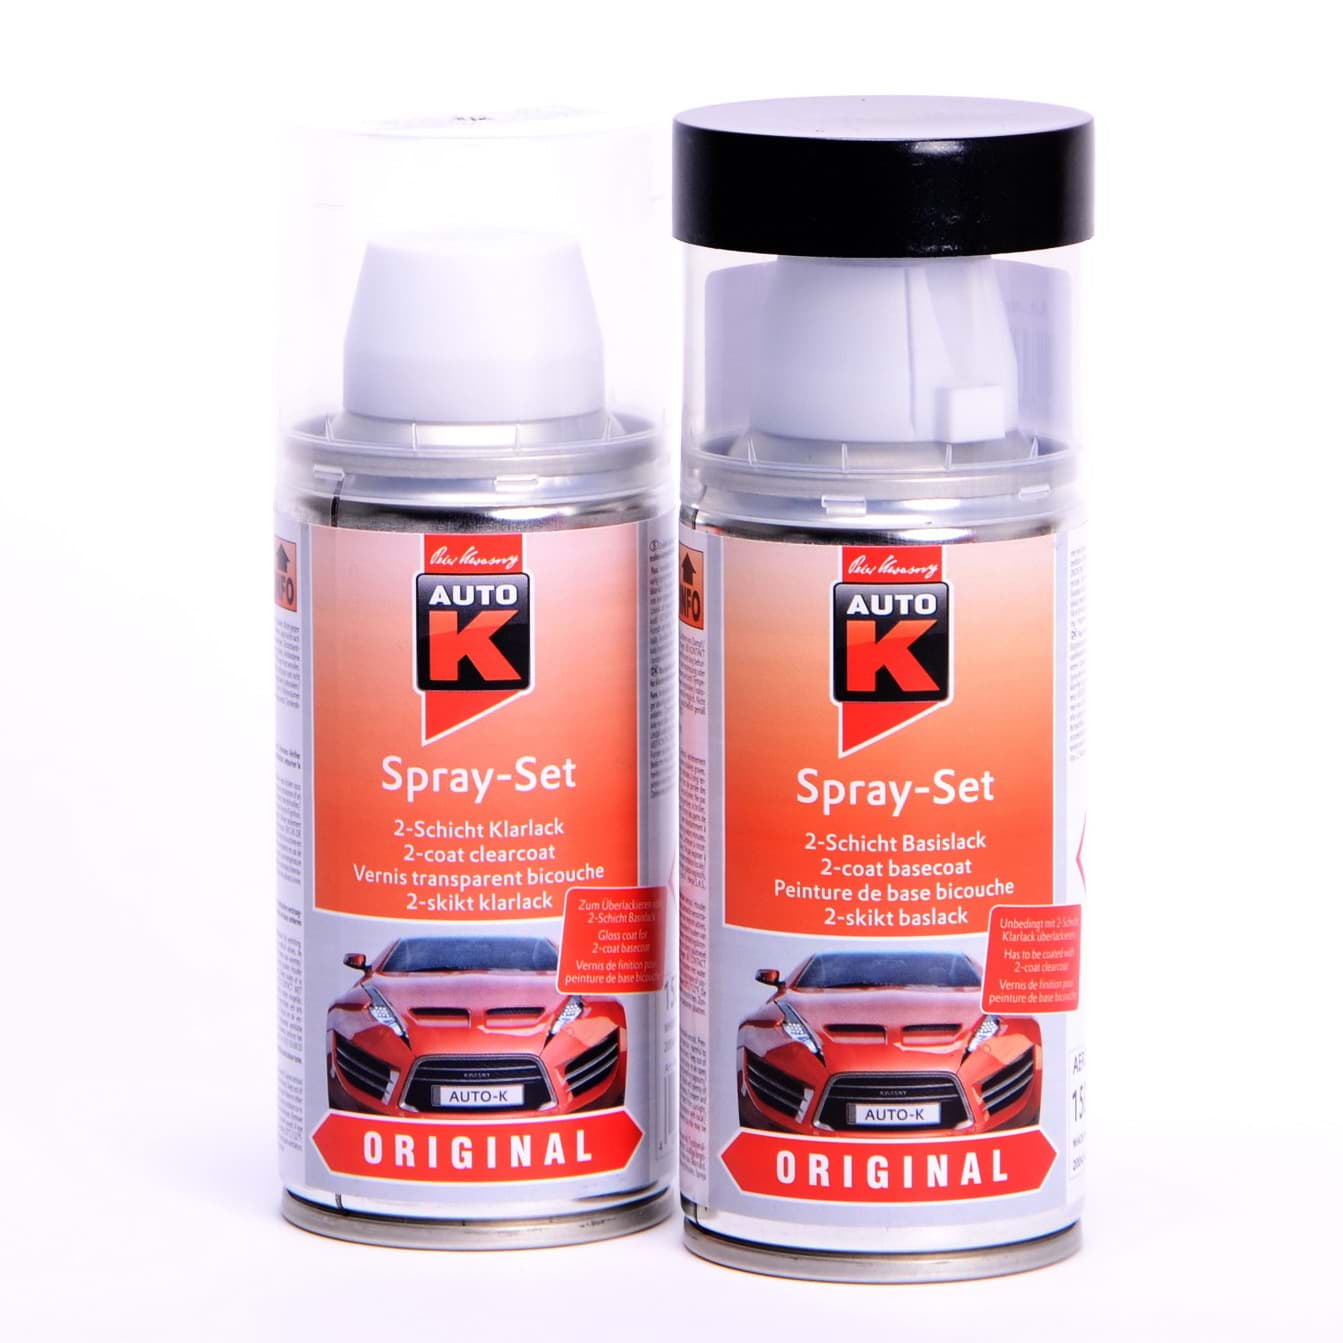 Auto-K Spray-Set Autolack für Opel 138 Starsiber met 21358 resmi